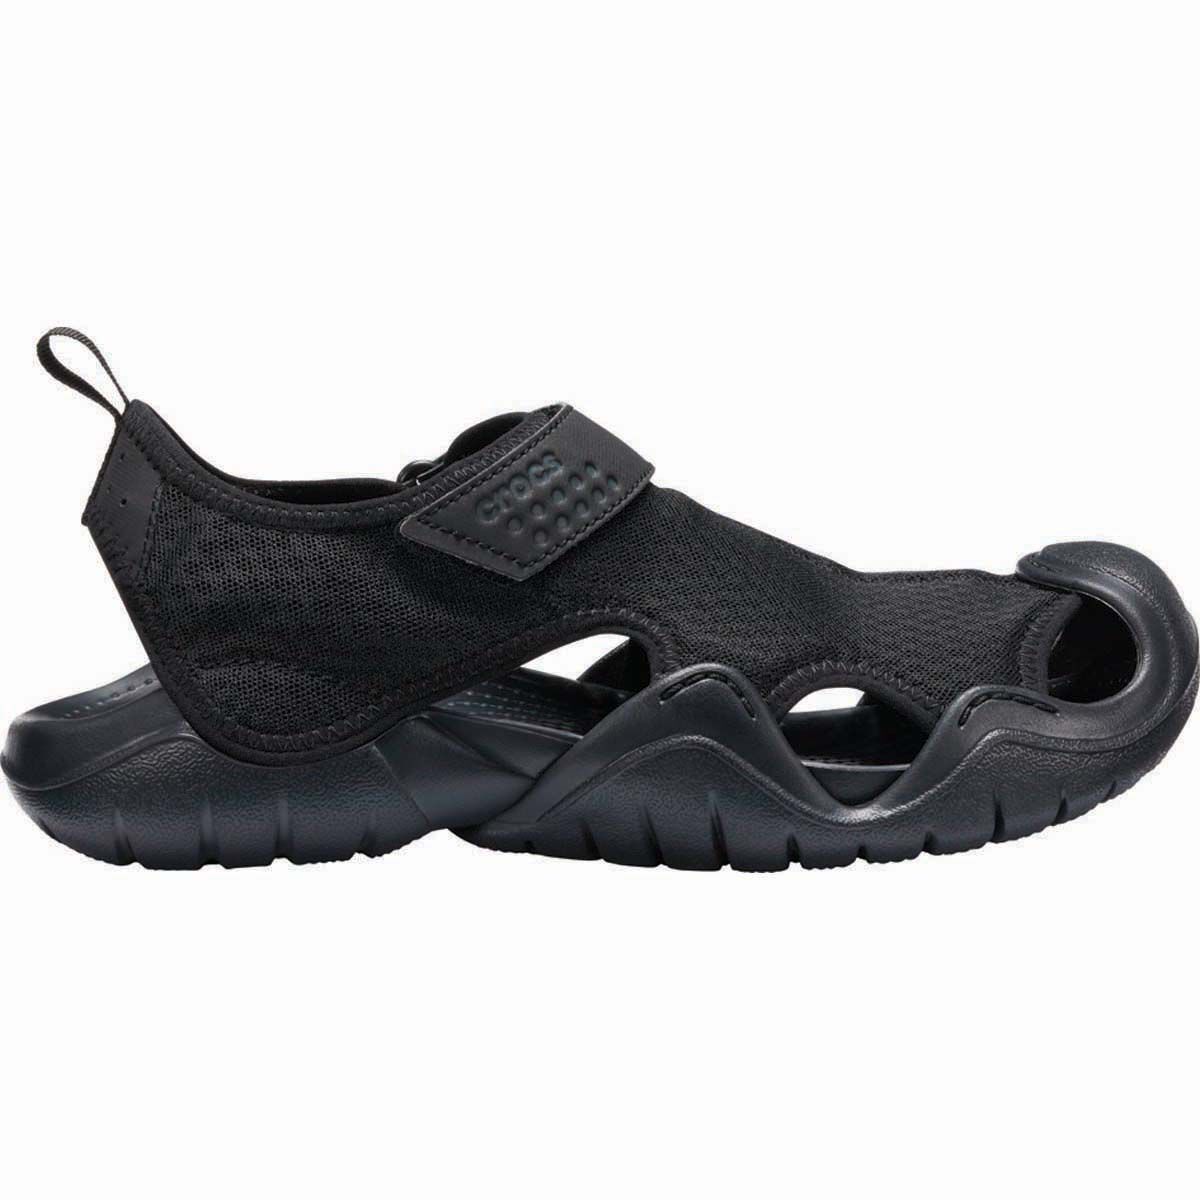 crocs water shoes canada